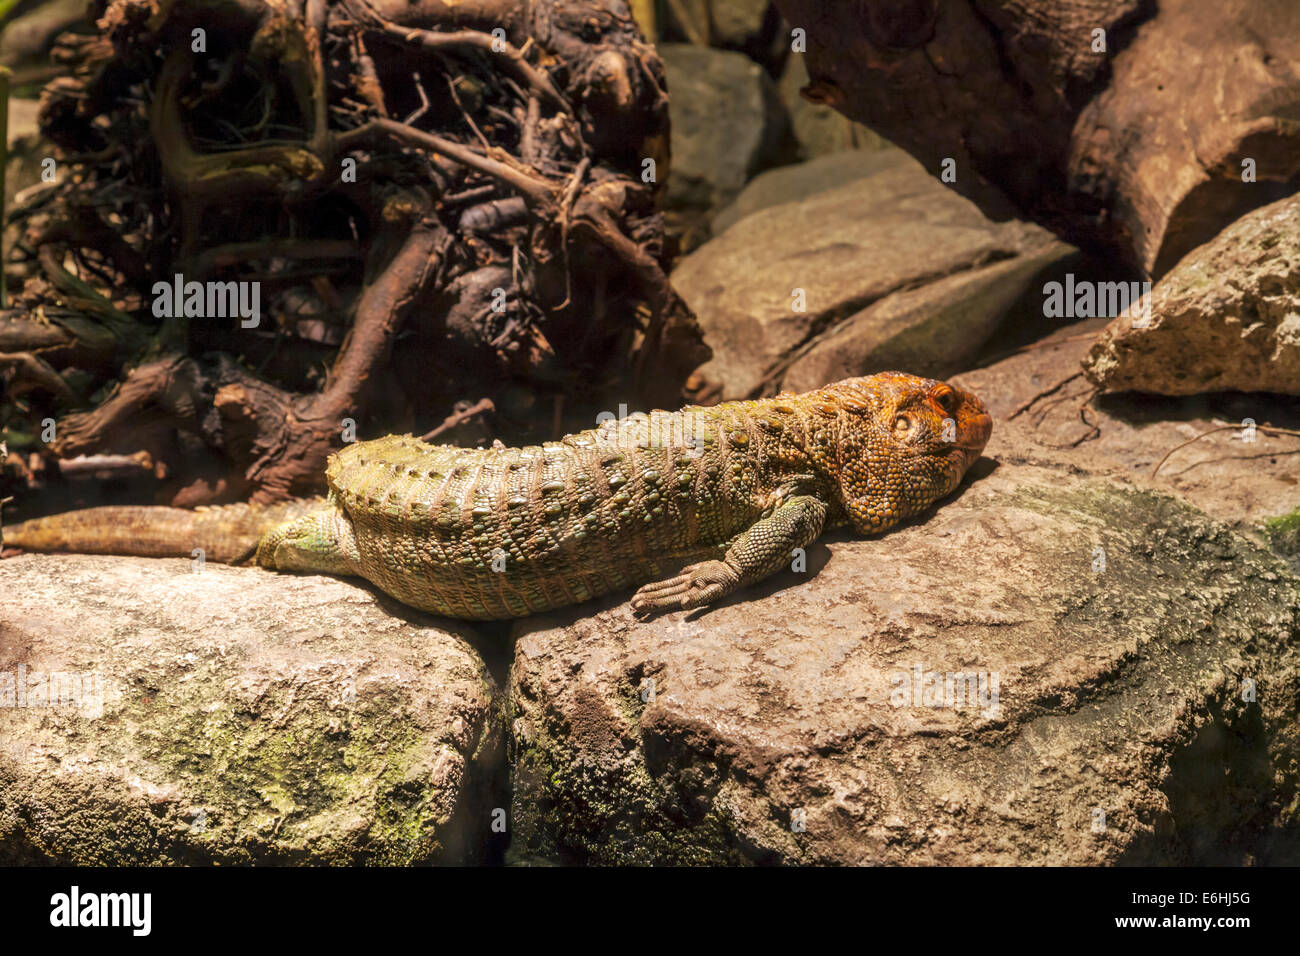 Caiman Lizard IDracaena guianensis) reptile resting on a rock in the Jacksonville Zoo serpentarium exhibit. Stock Photo